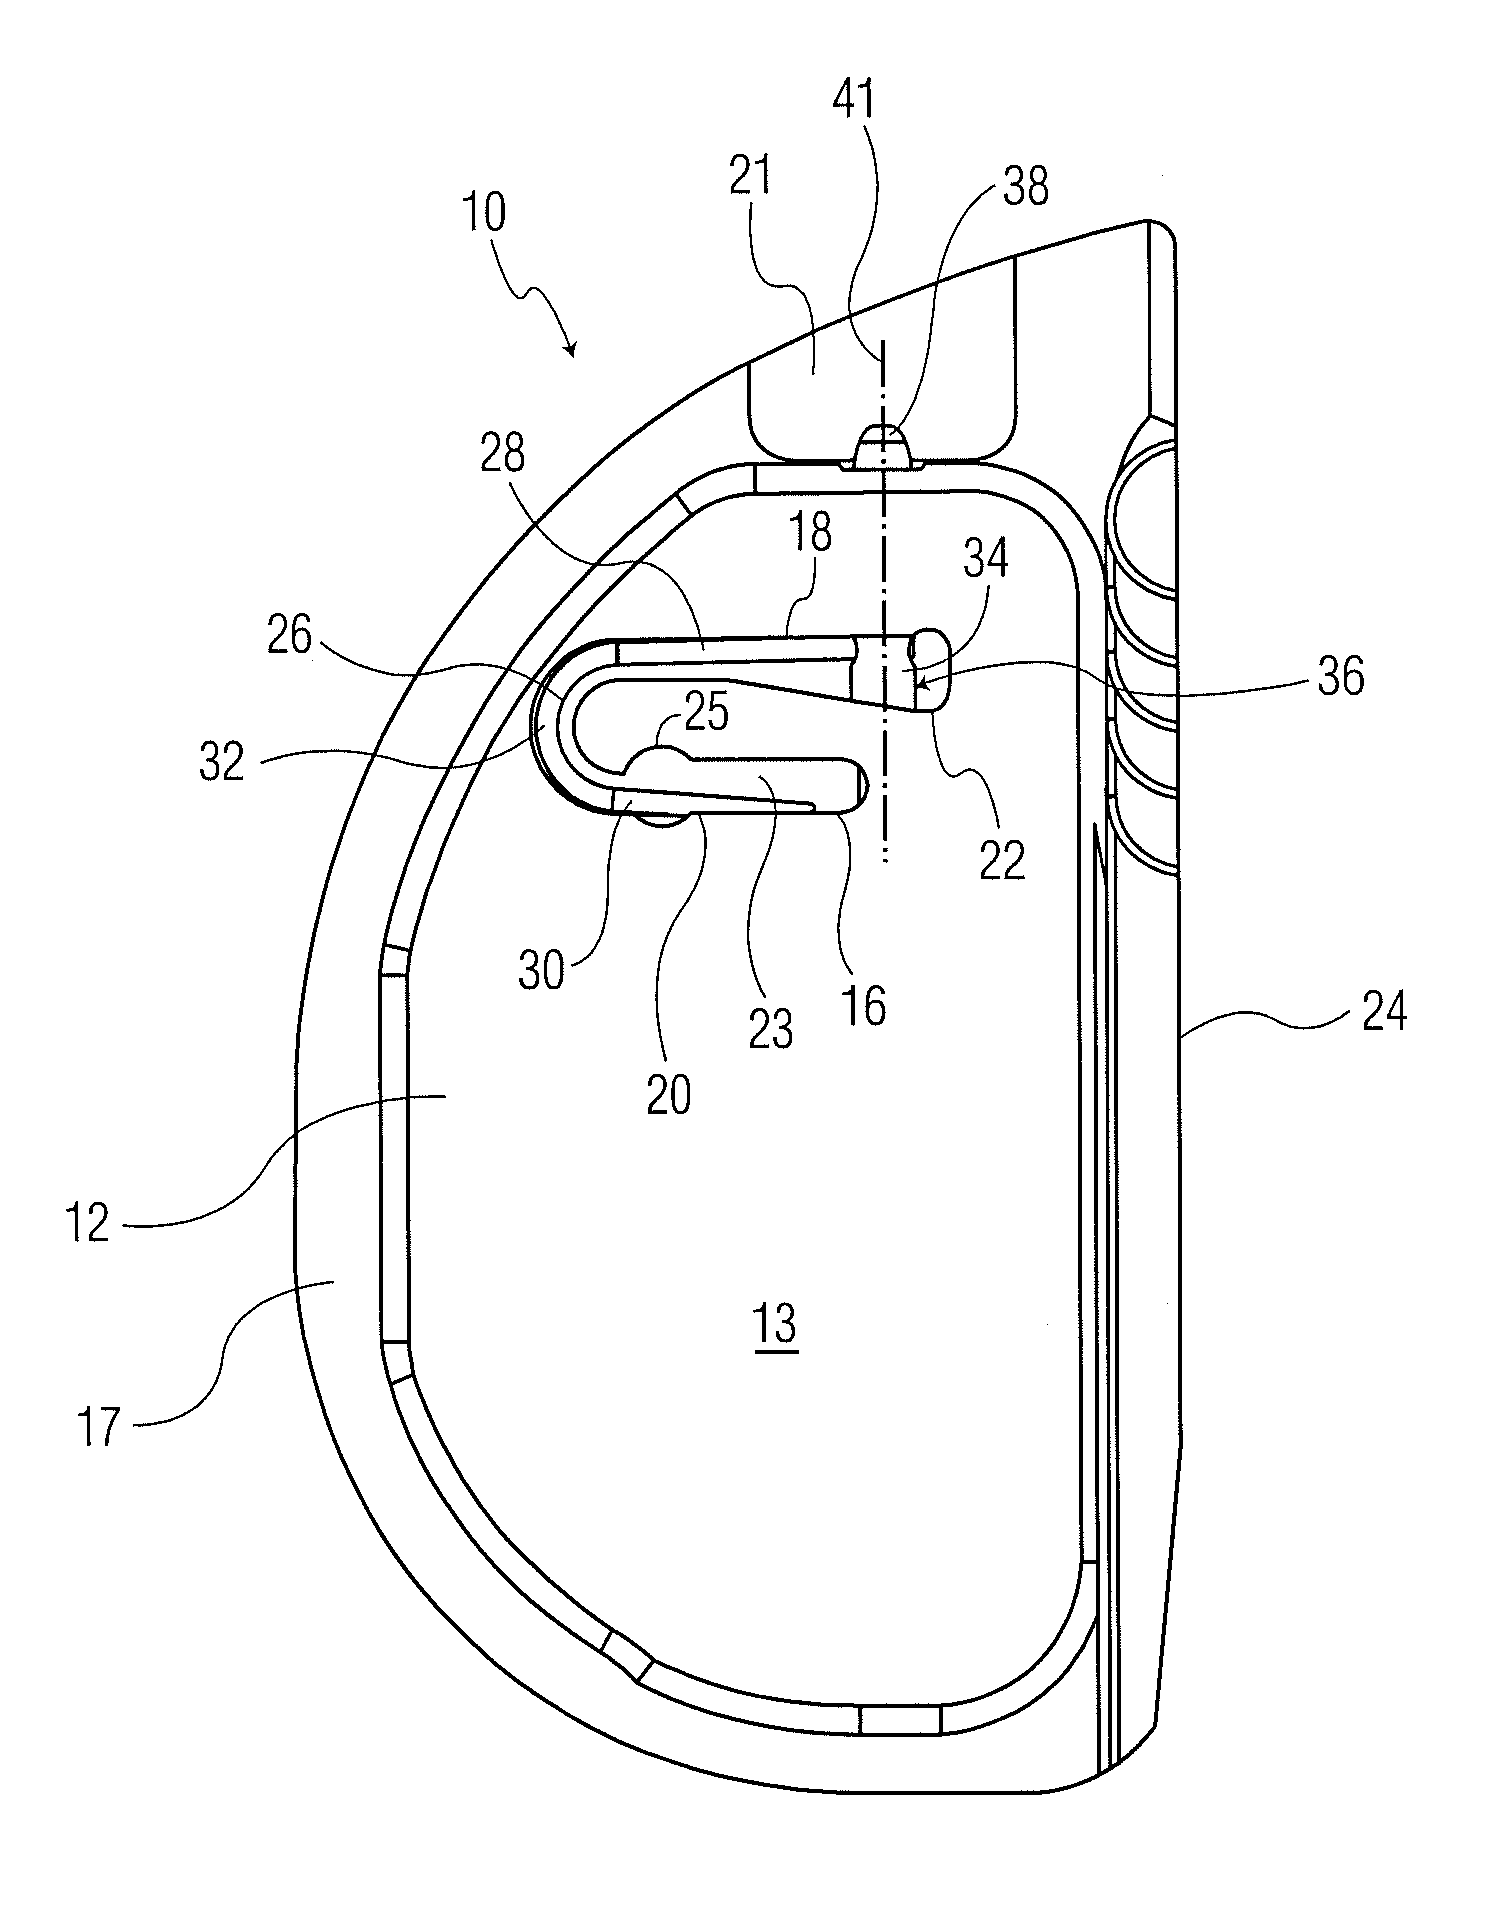 Tibial insert locking mechanism